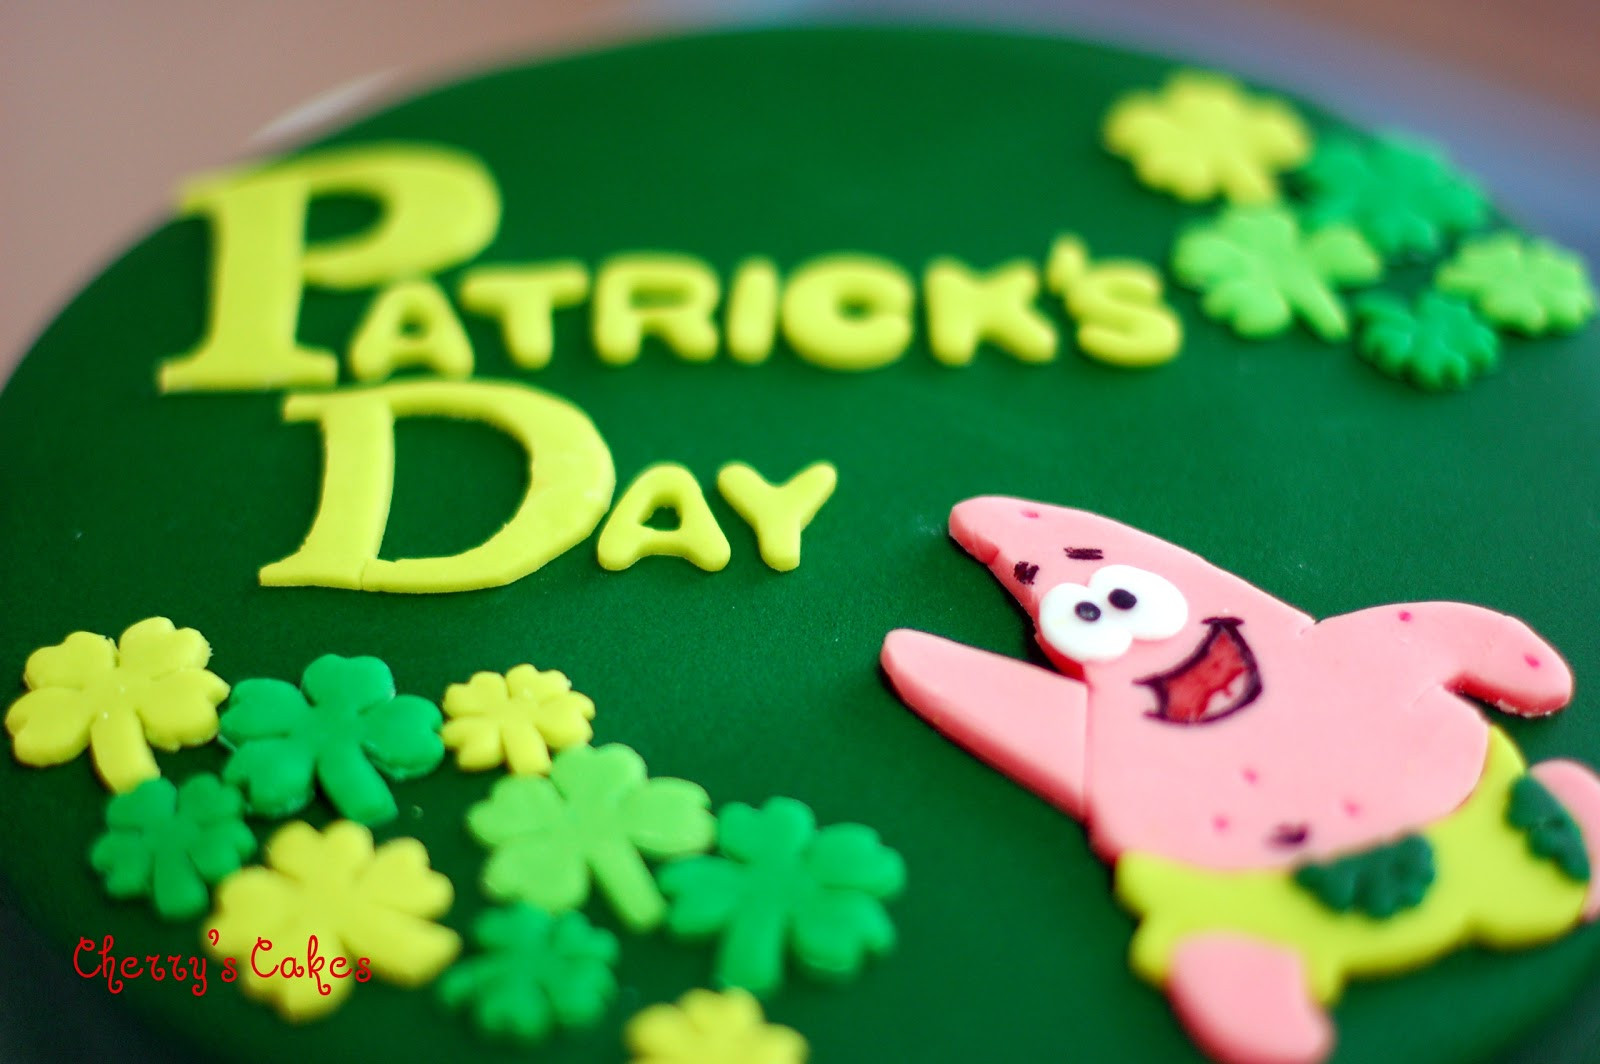 Happy Birthday Patrick Cake
 Cherry s Cakes Patrick s Day